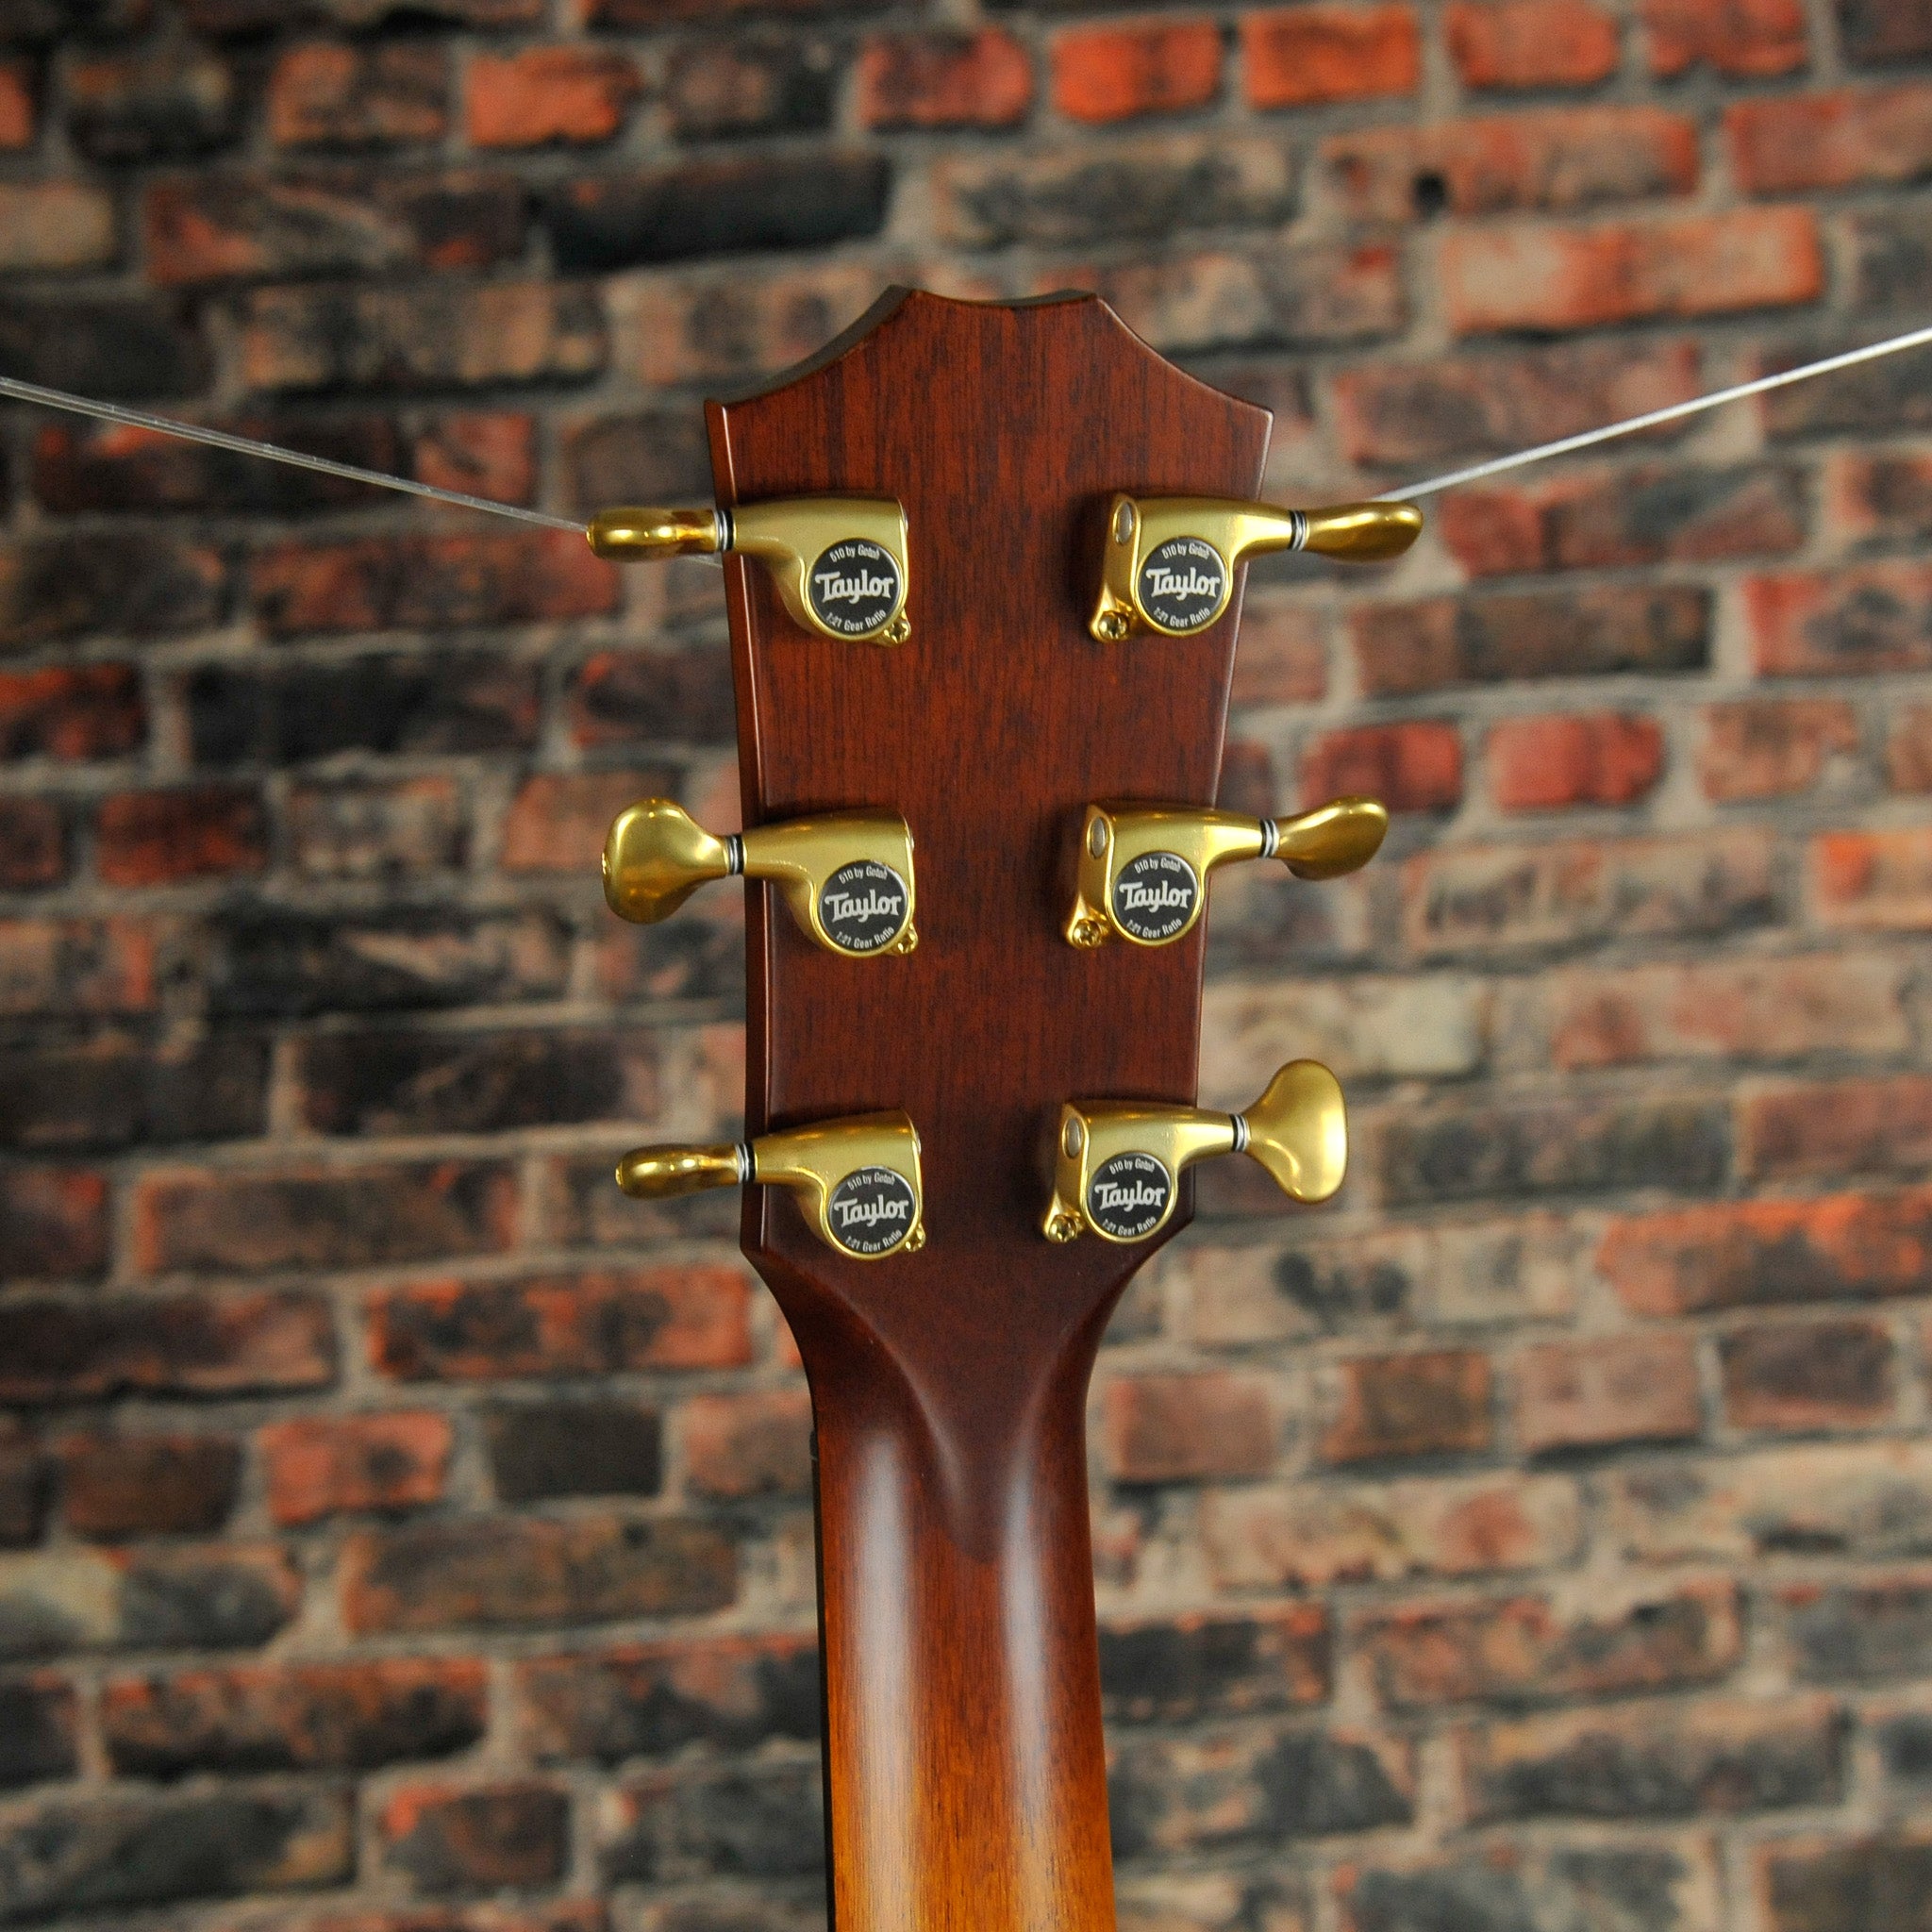 Taylor K24ce V-Class Acoustic Electric Guitar